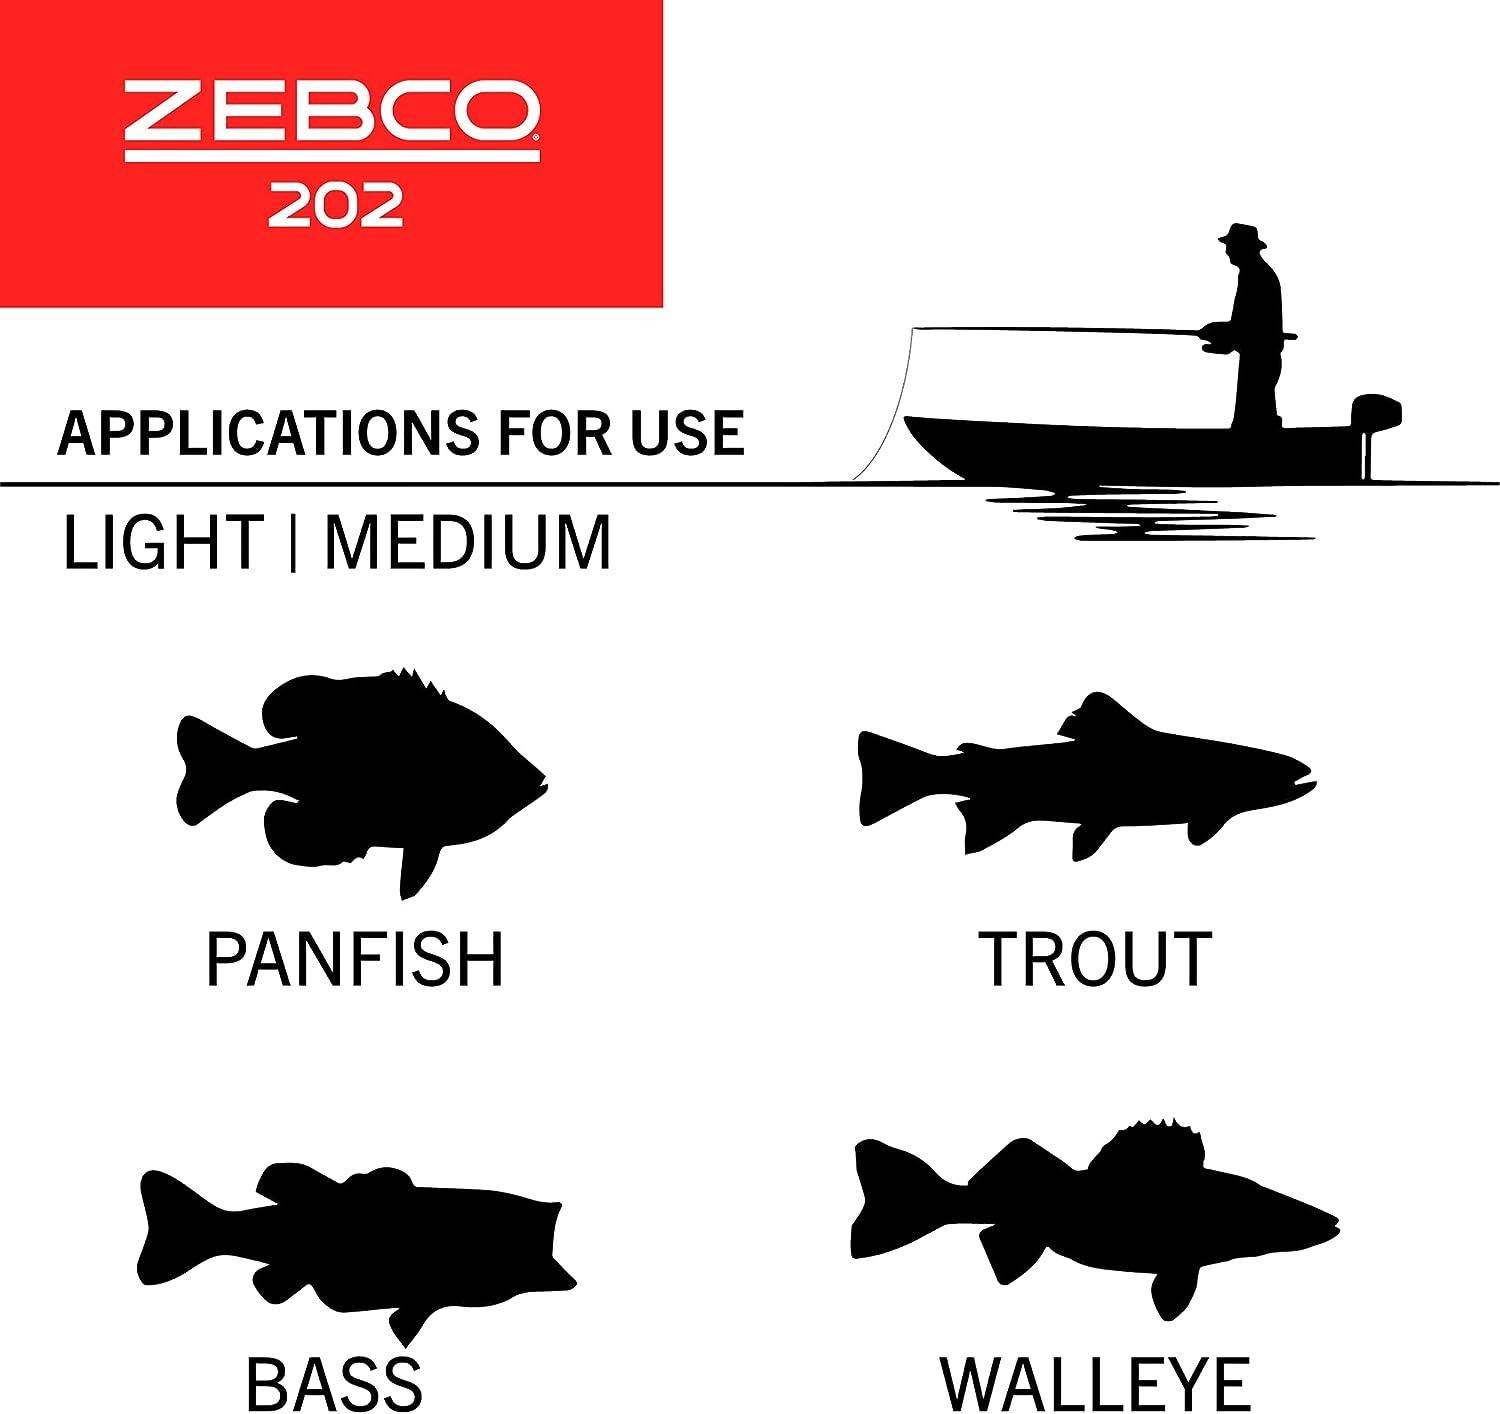 Zebco 202 Spincast Fishing Reel, Size 30 Reel, Right-Hand Retrieve